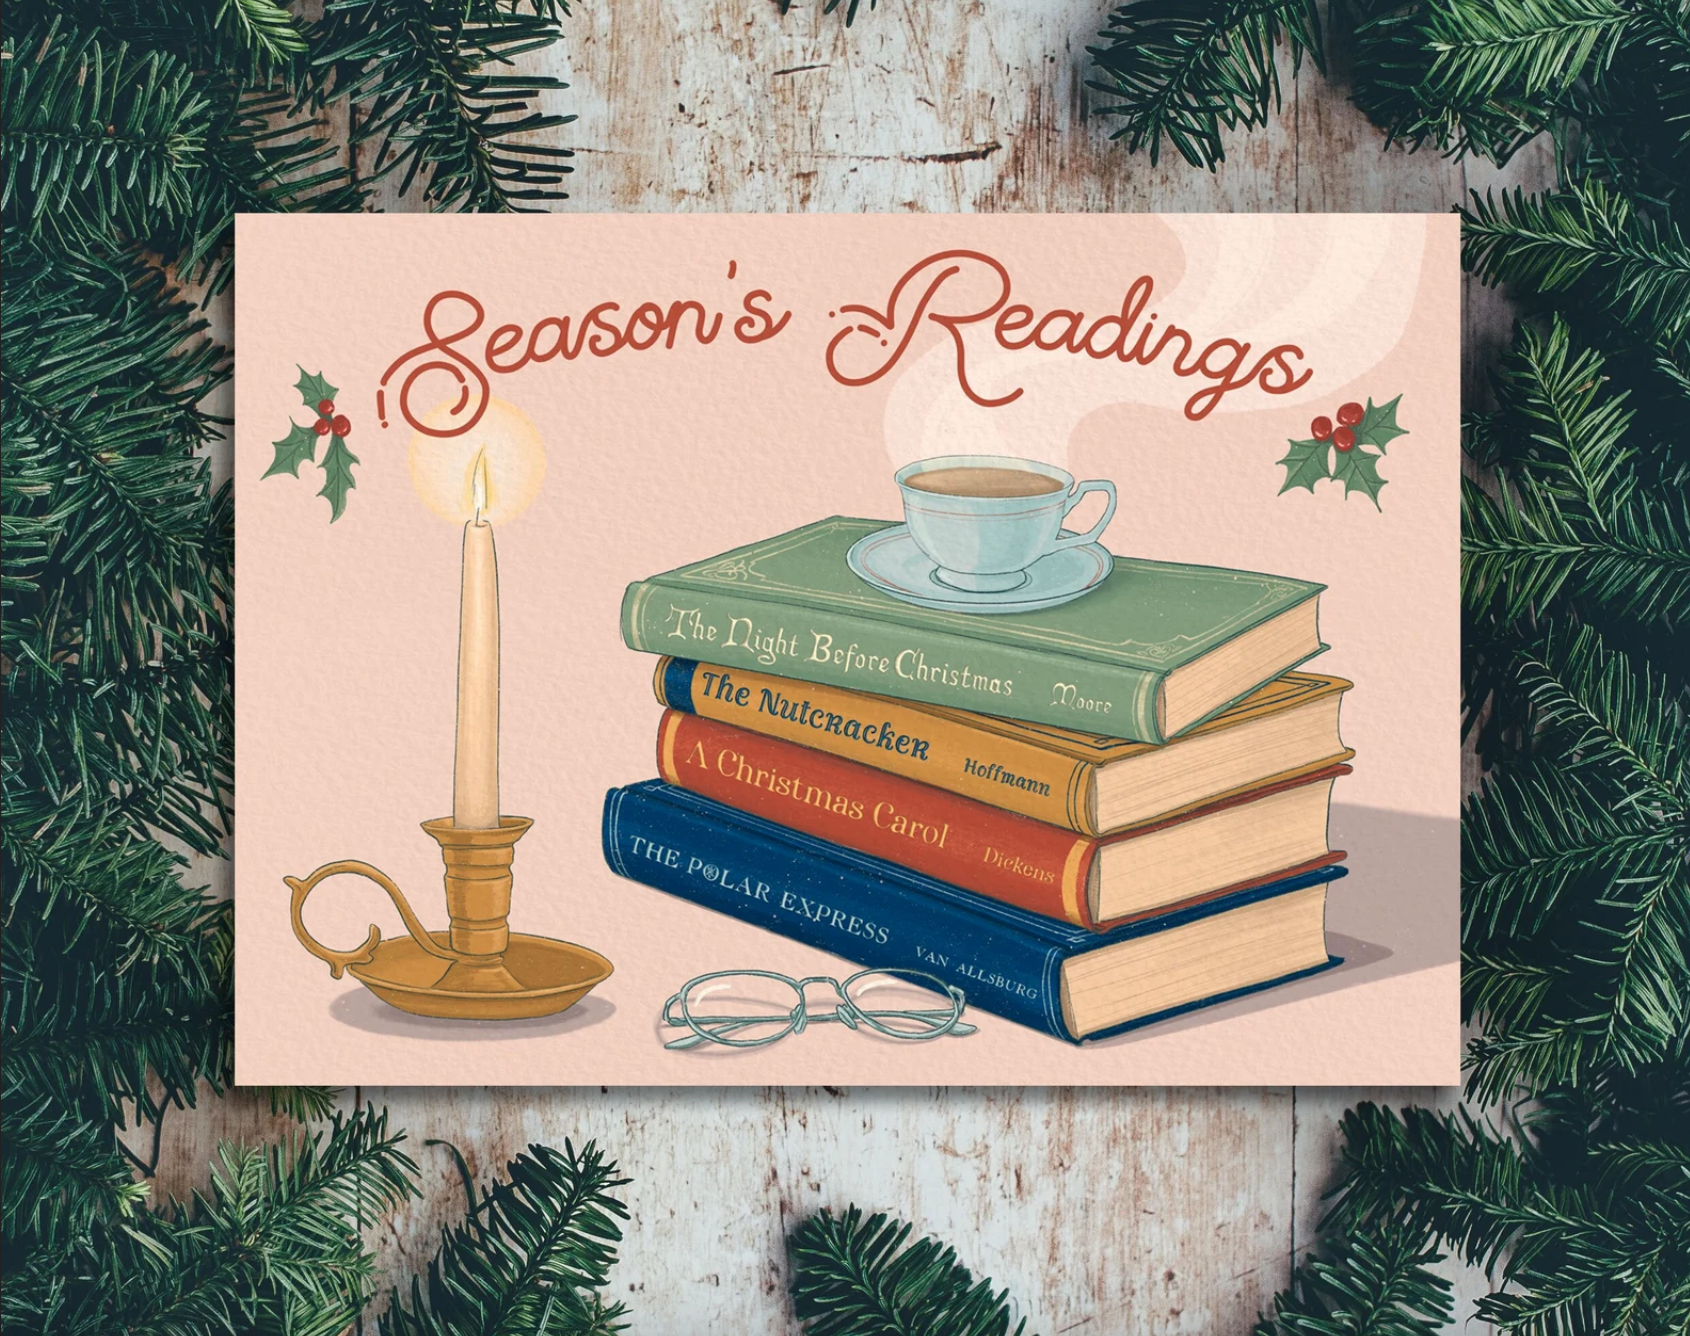 A card reading "Seasons Readings"